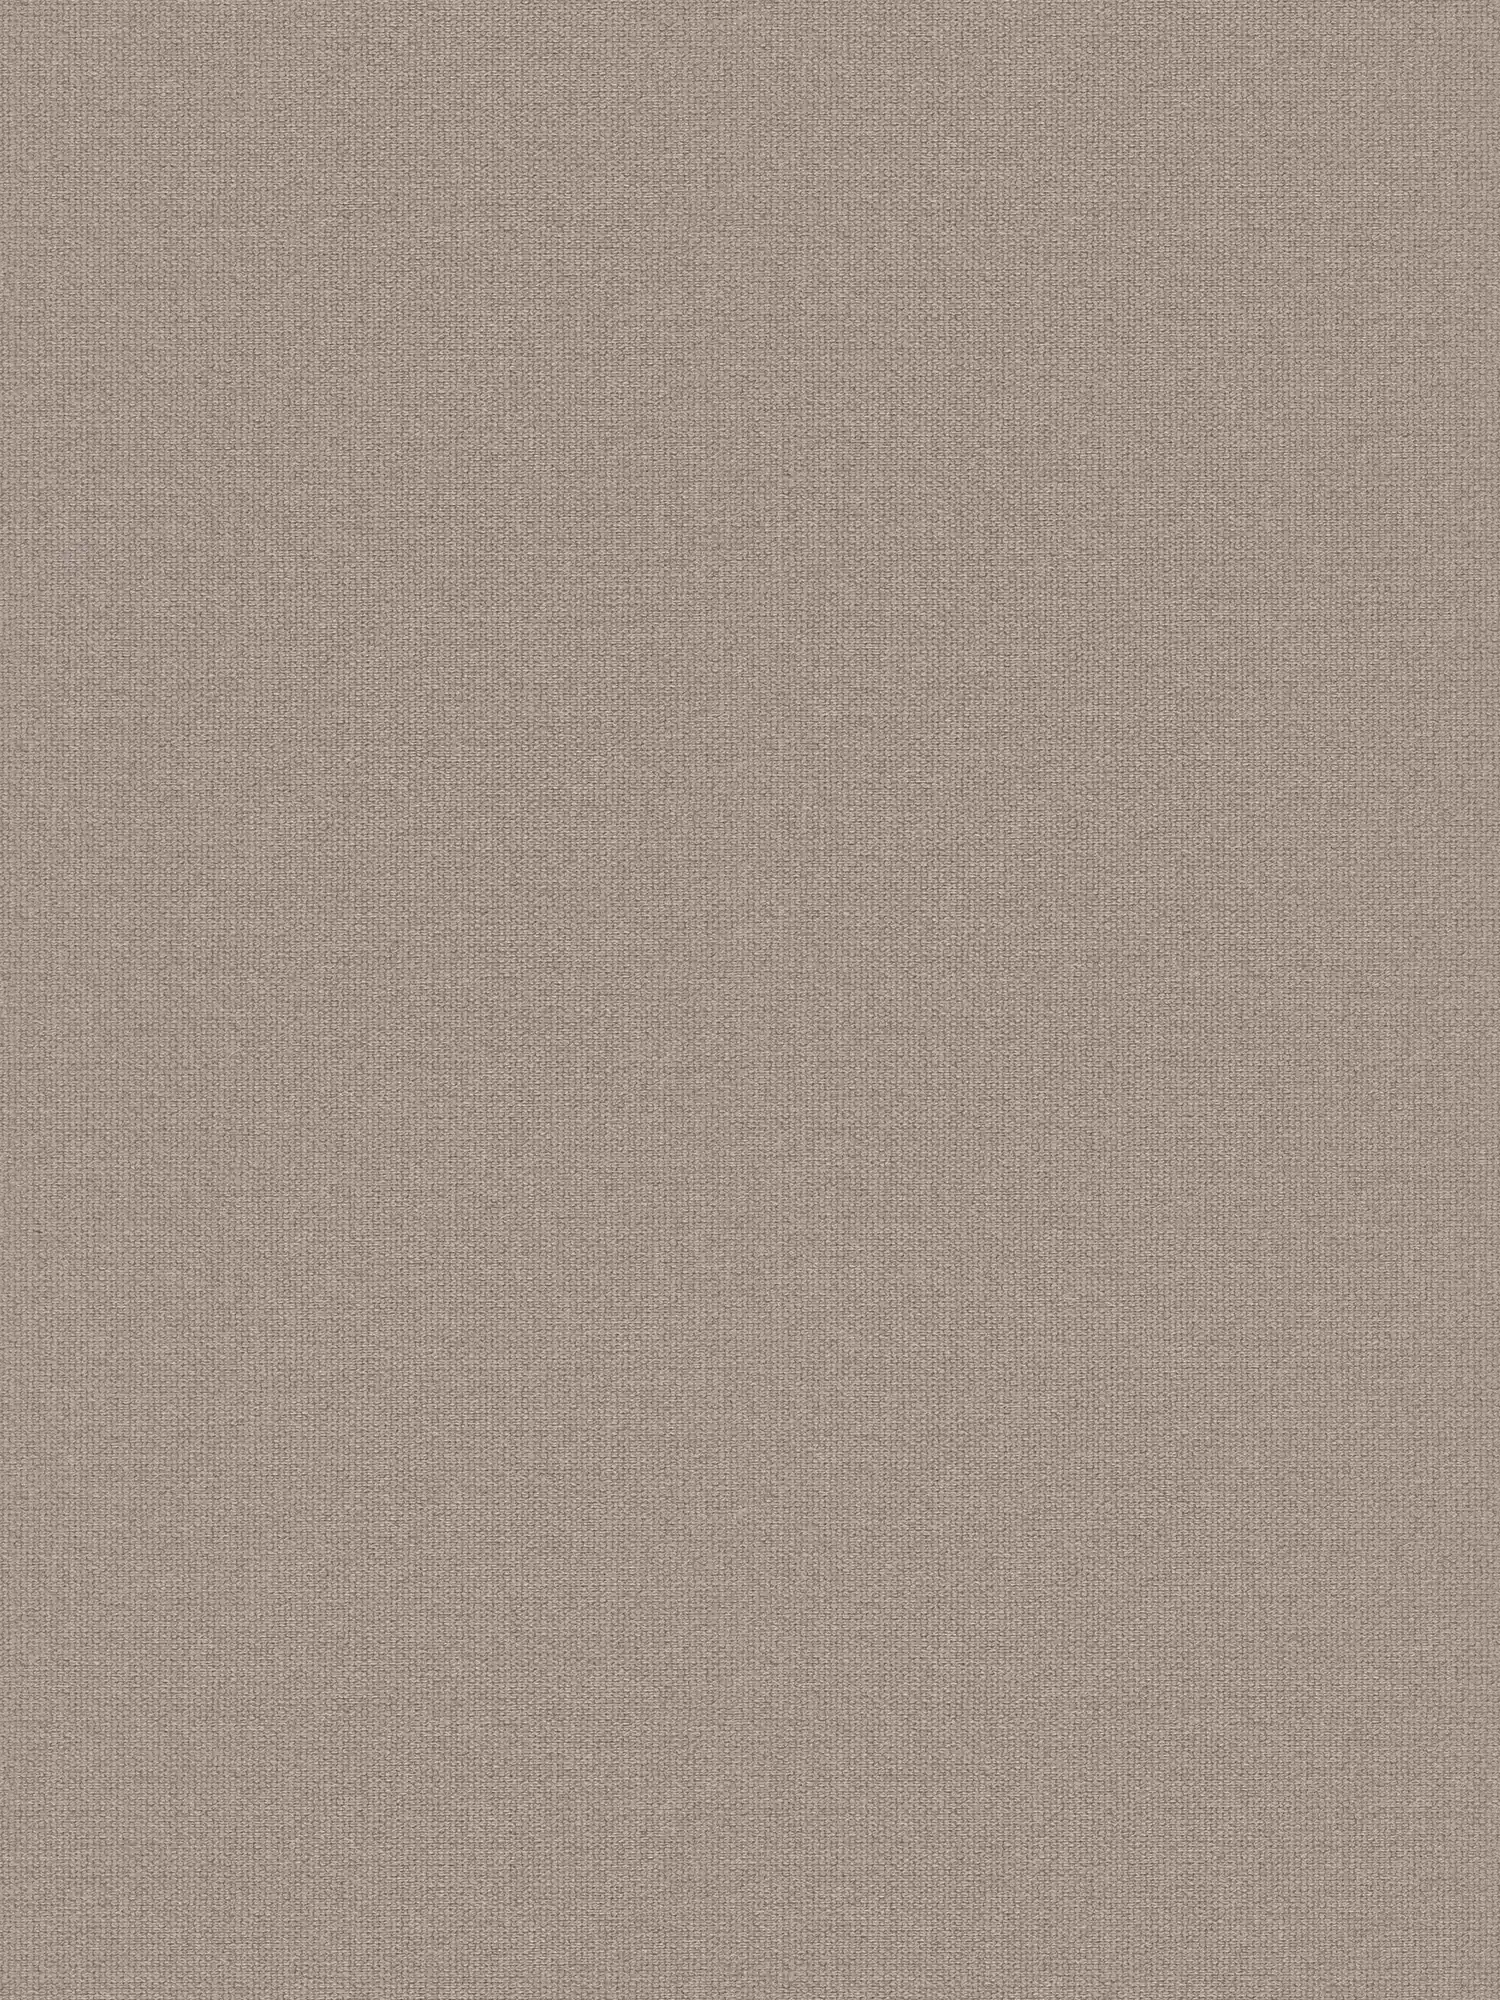 papel pintado de aspecto de lino con detalles de estructura, liso - gris, beige
